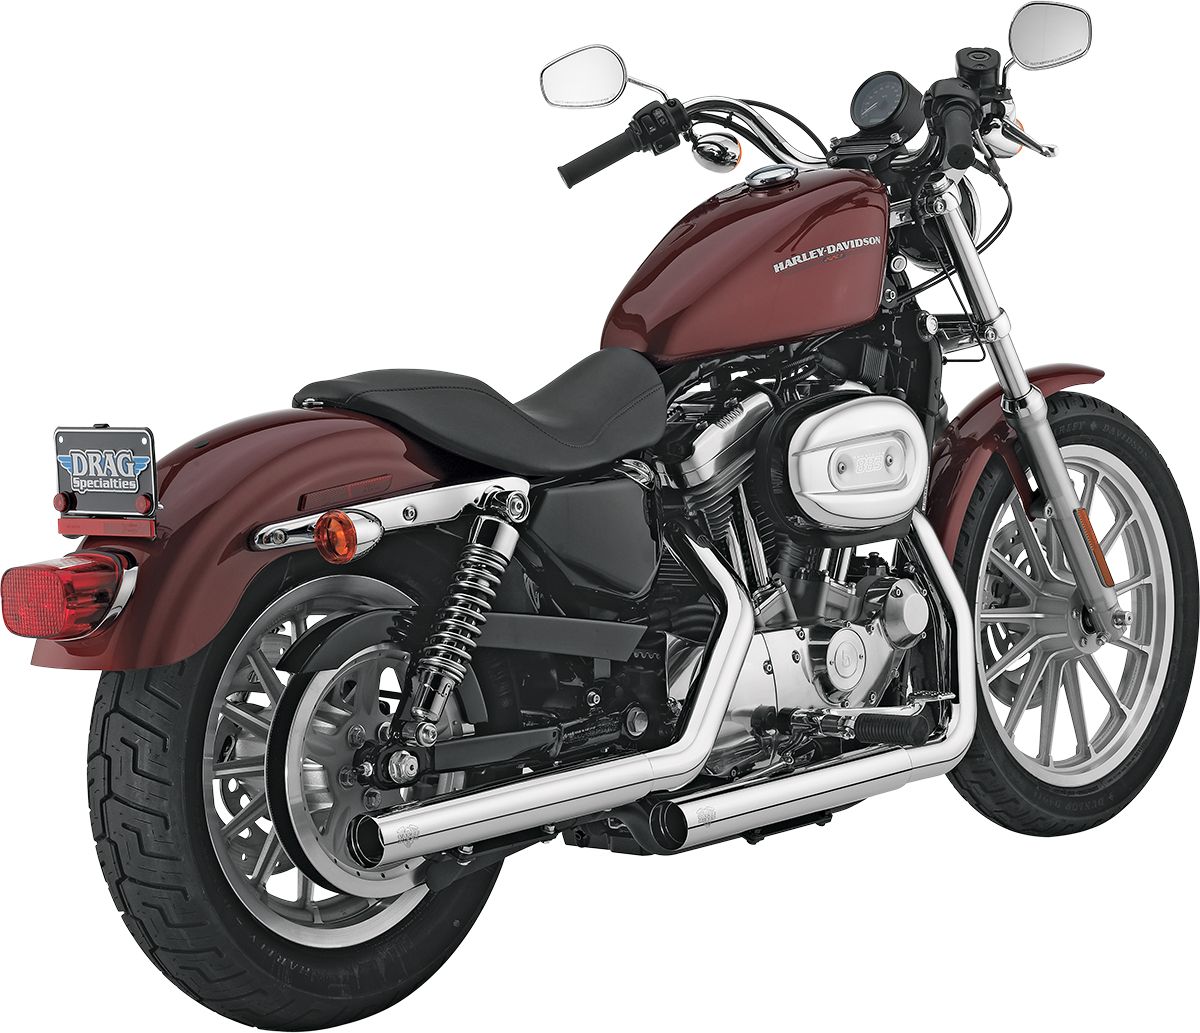 Vance & hines KIPUFOGÓ STRAIGHTSHOTS HS CHROME Harley Davidson XL 1200 X Forty-Eight motor kipufogó 0